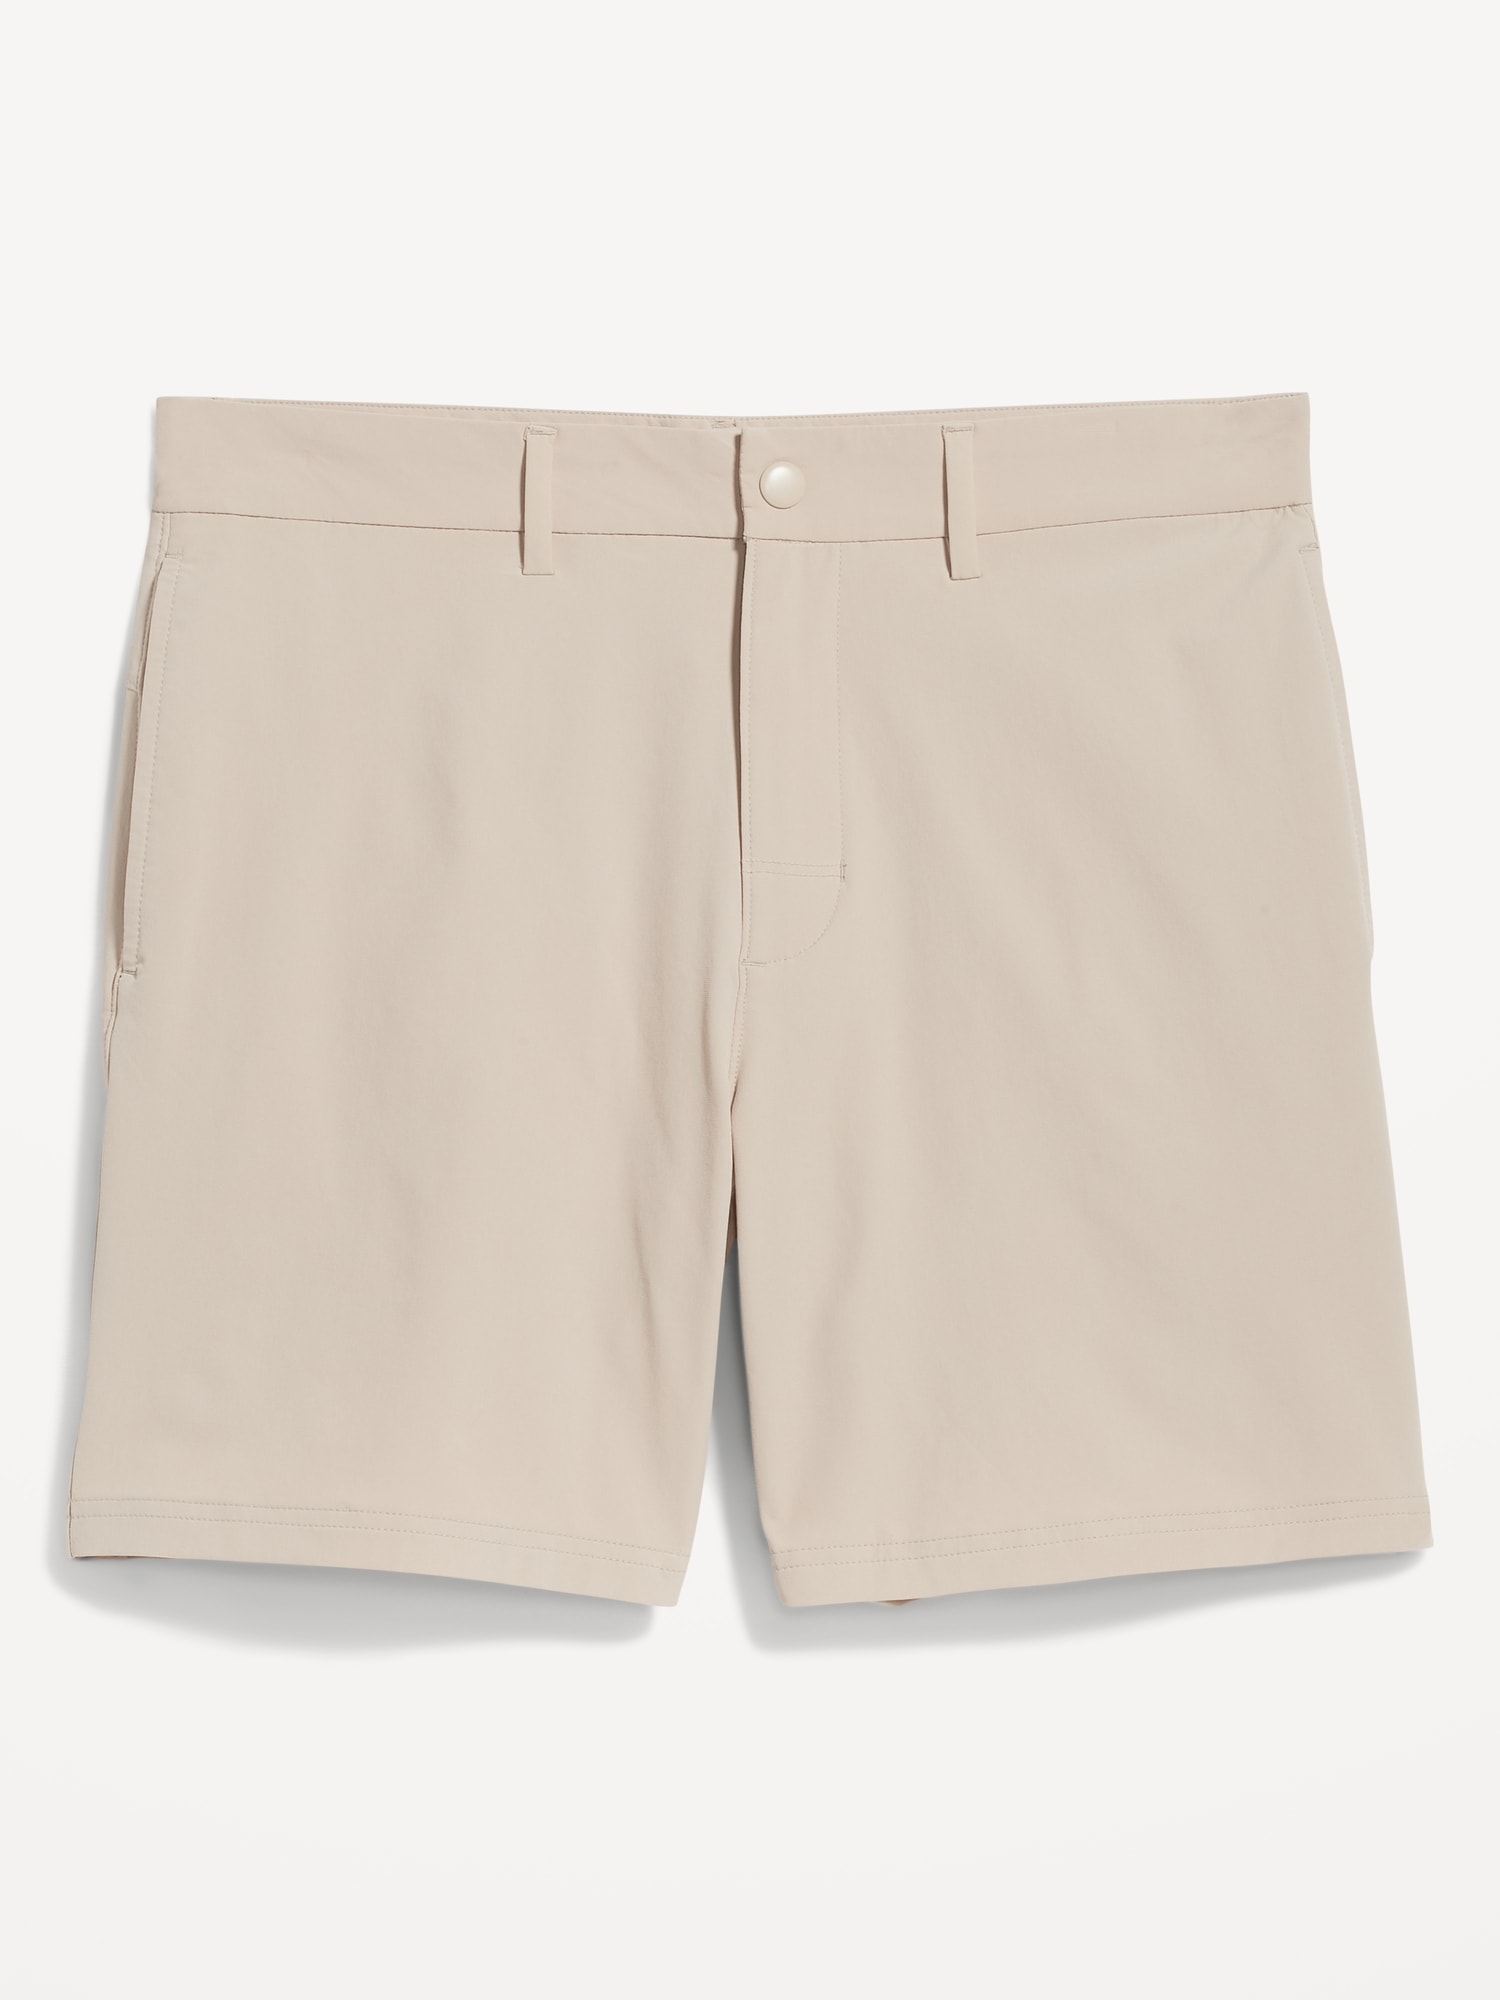 Old Navy StretchTech Nylon Chino Shorts for Men -- 7-inch inseam beige. 1